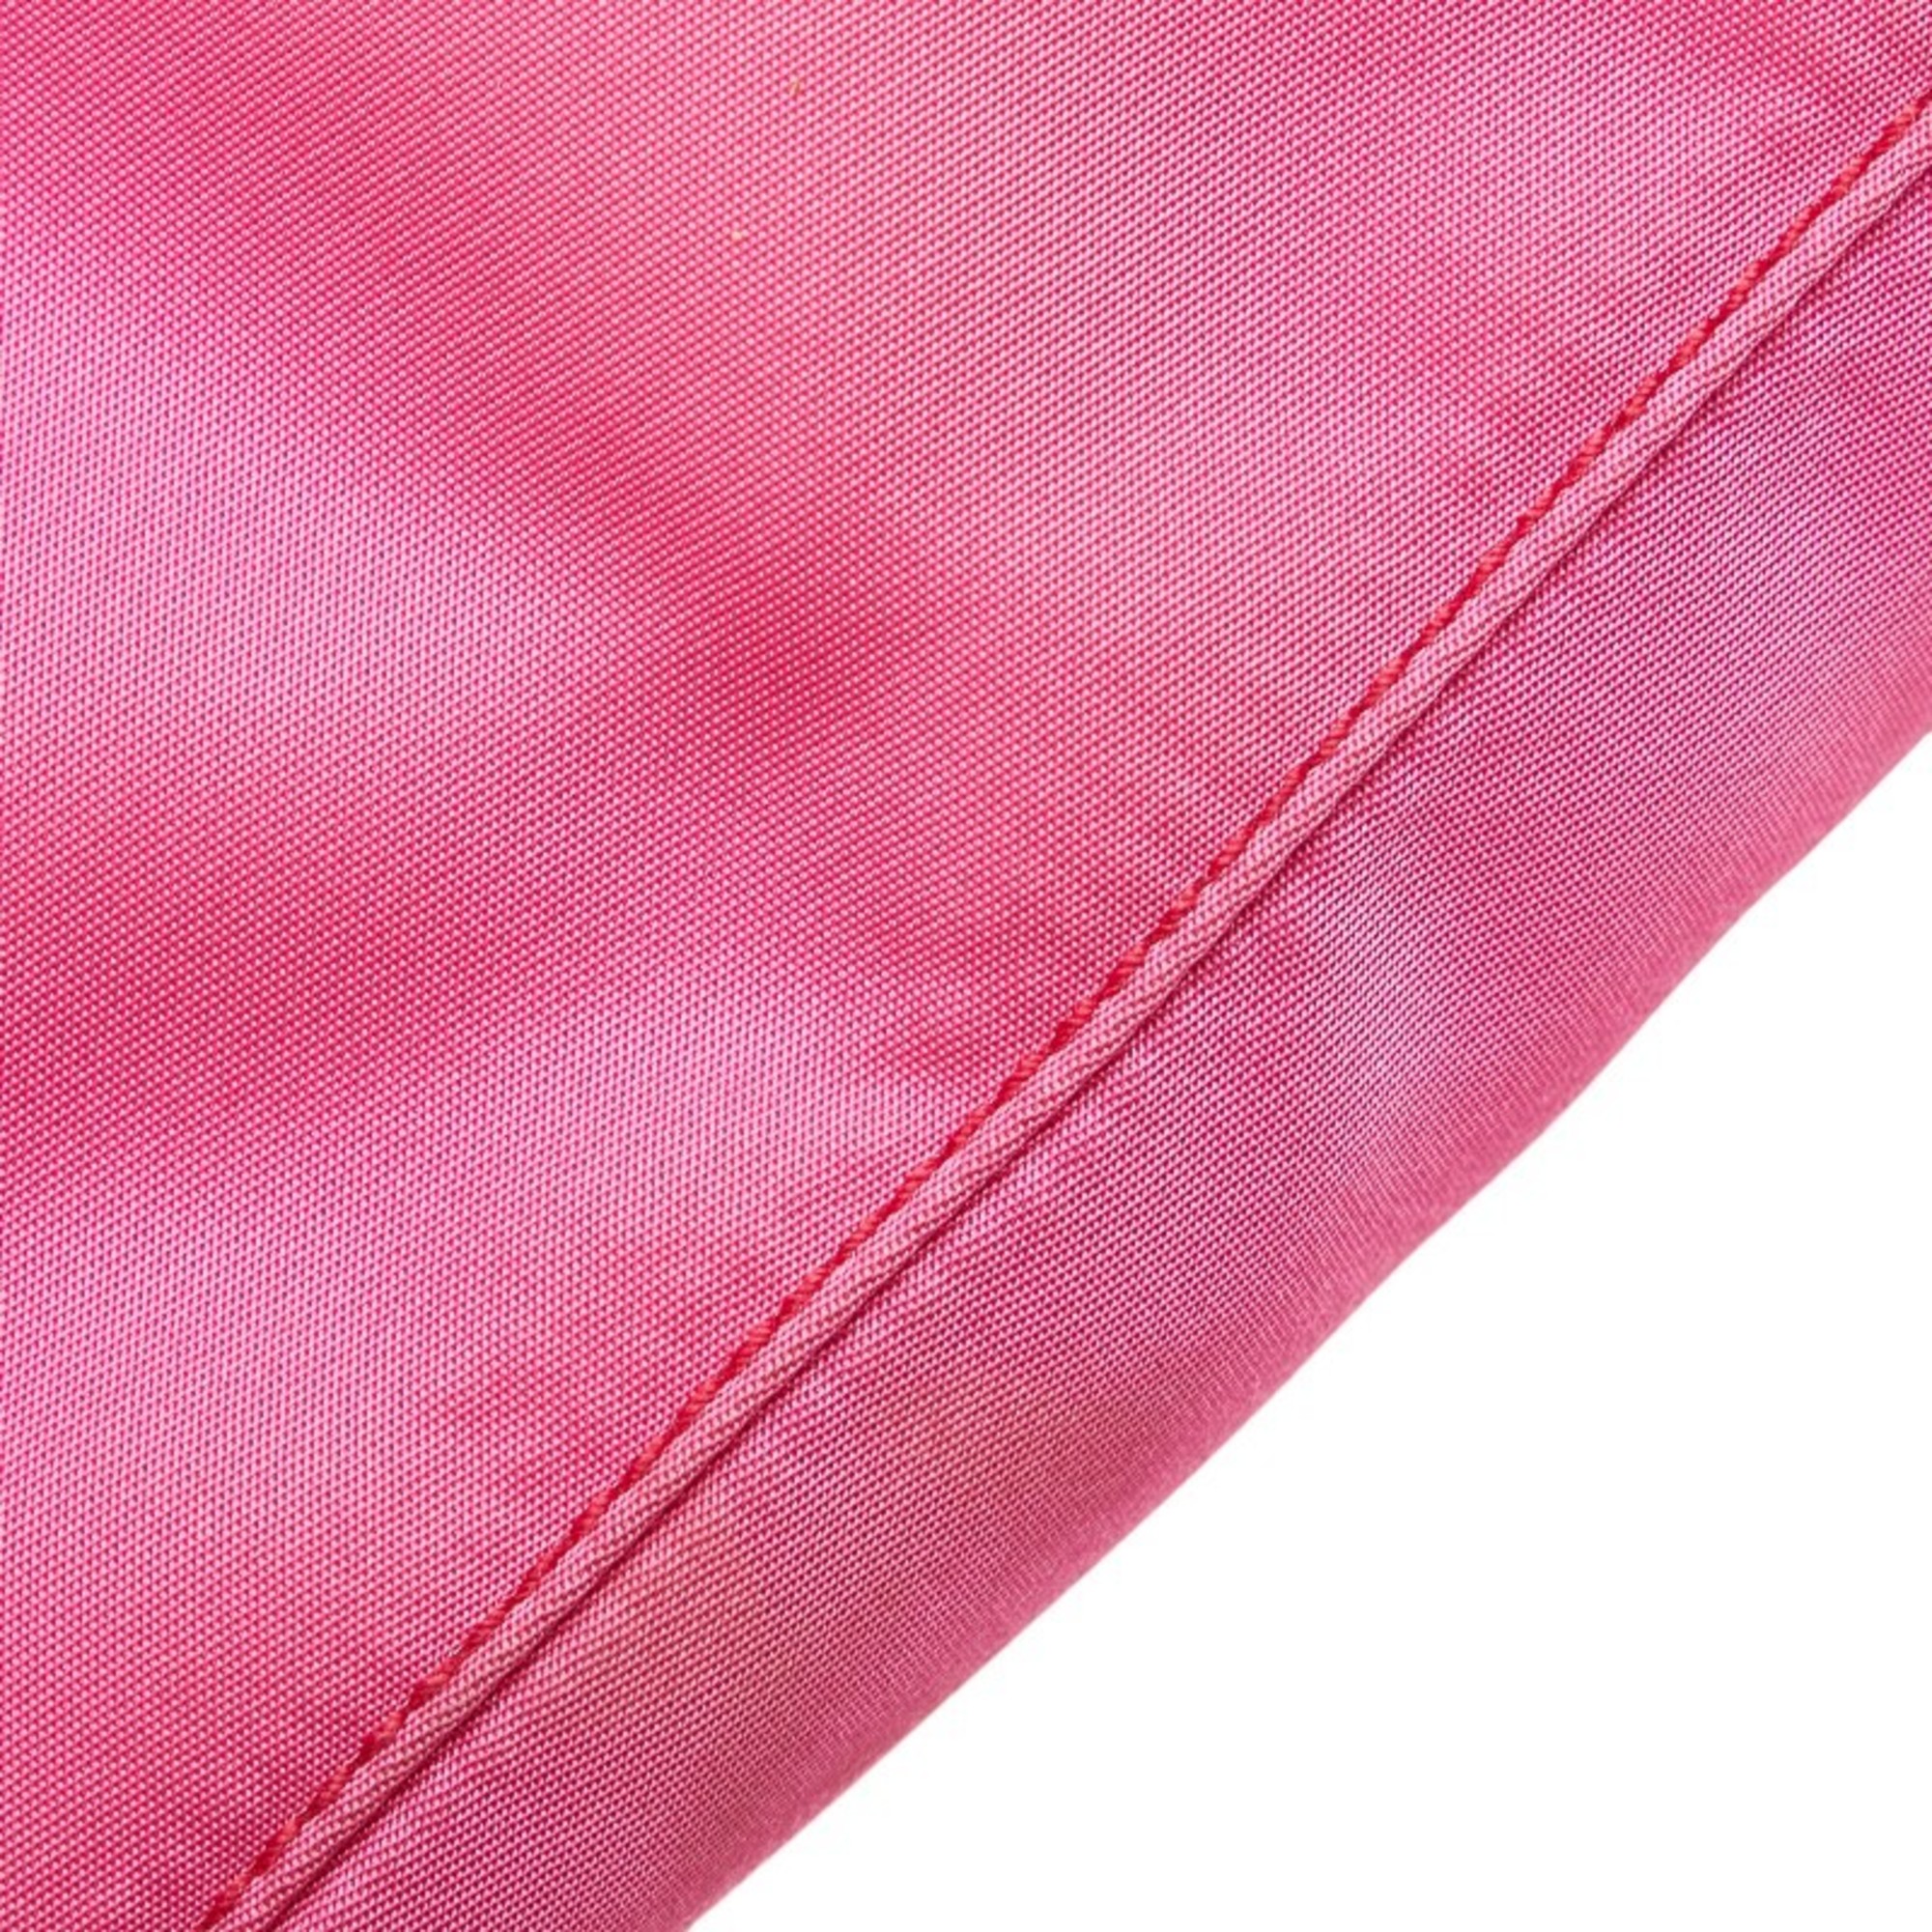 Prada Jacquard Handbag Pink Red Nylon Patent Leather Women's PRADA